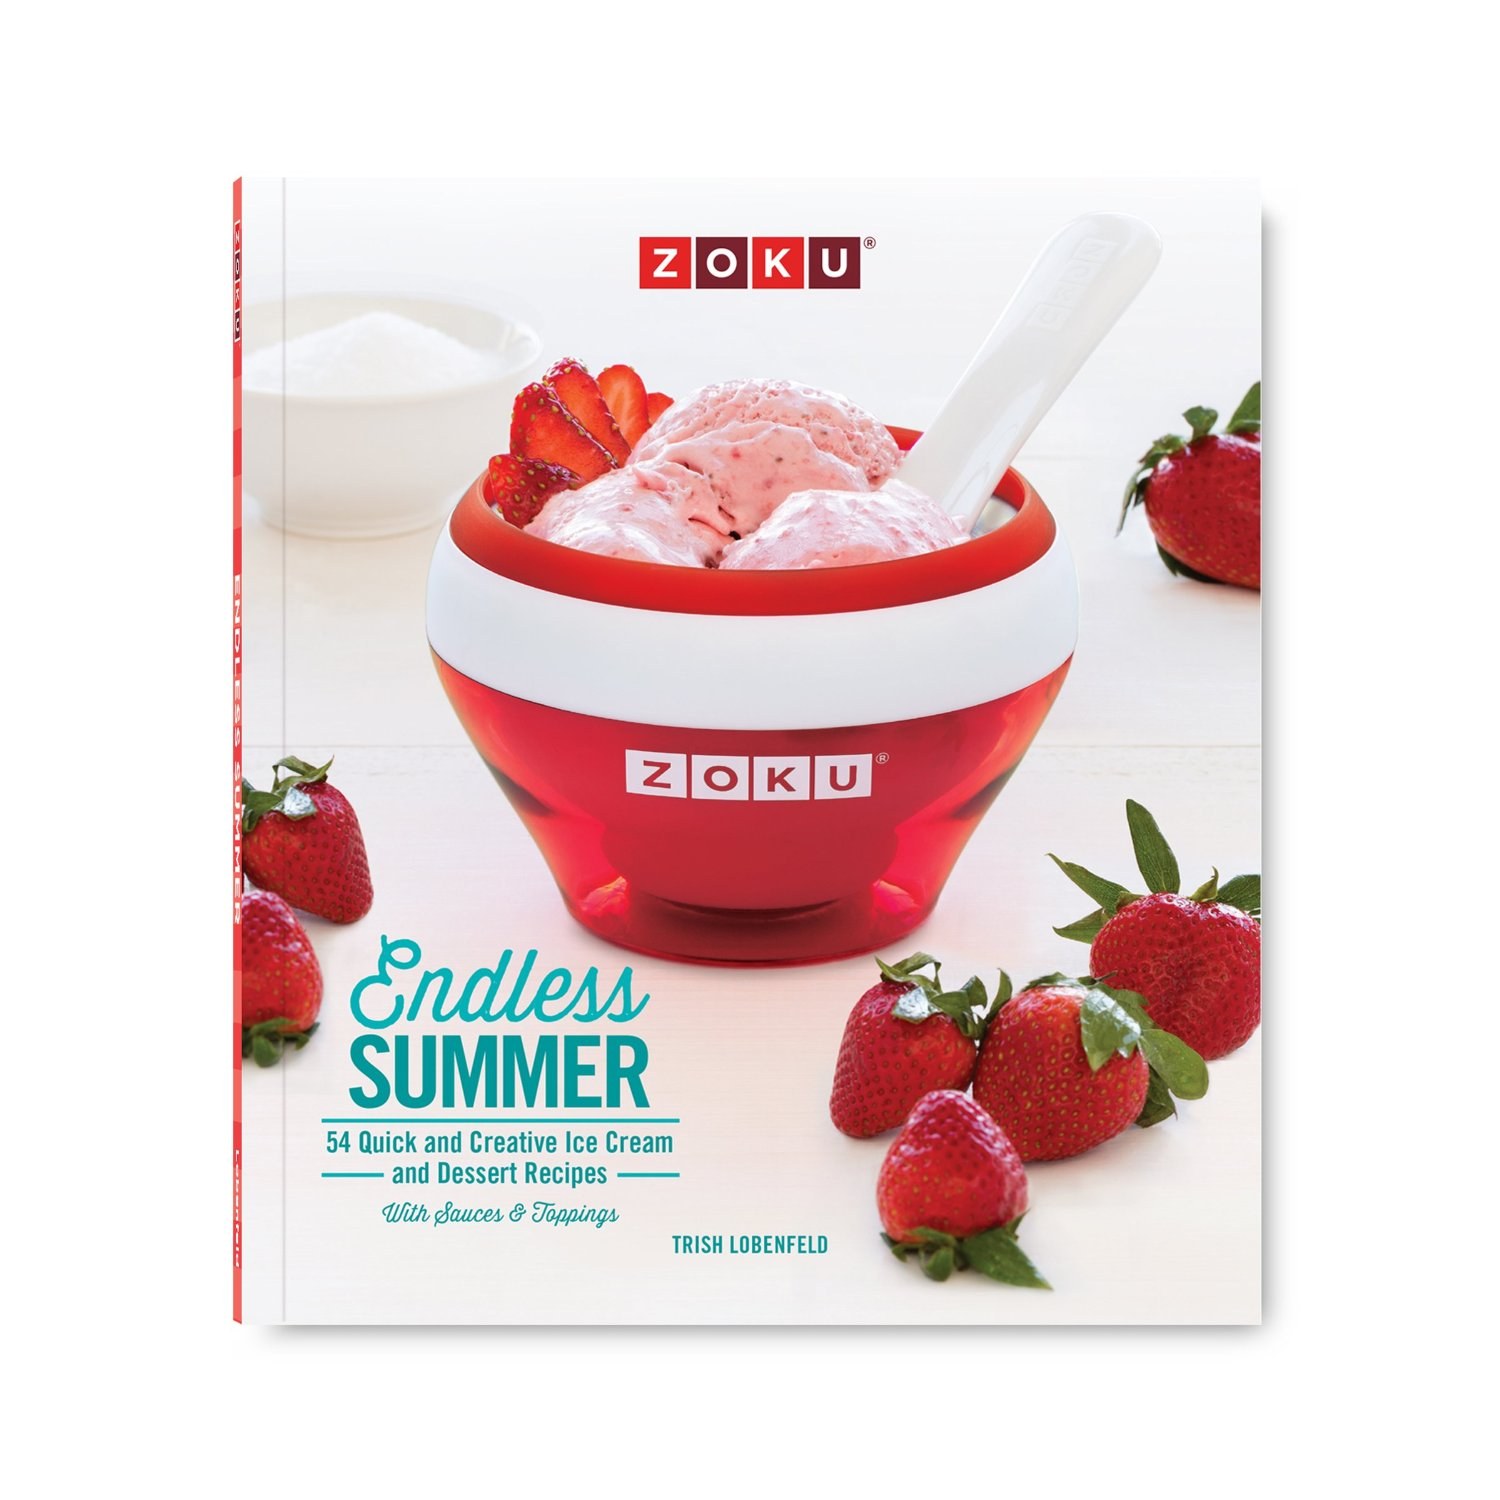 Zoku Endless Summer Ice Cream Recipe Book - 54 quick and inspiring recipes - official  stockist